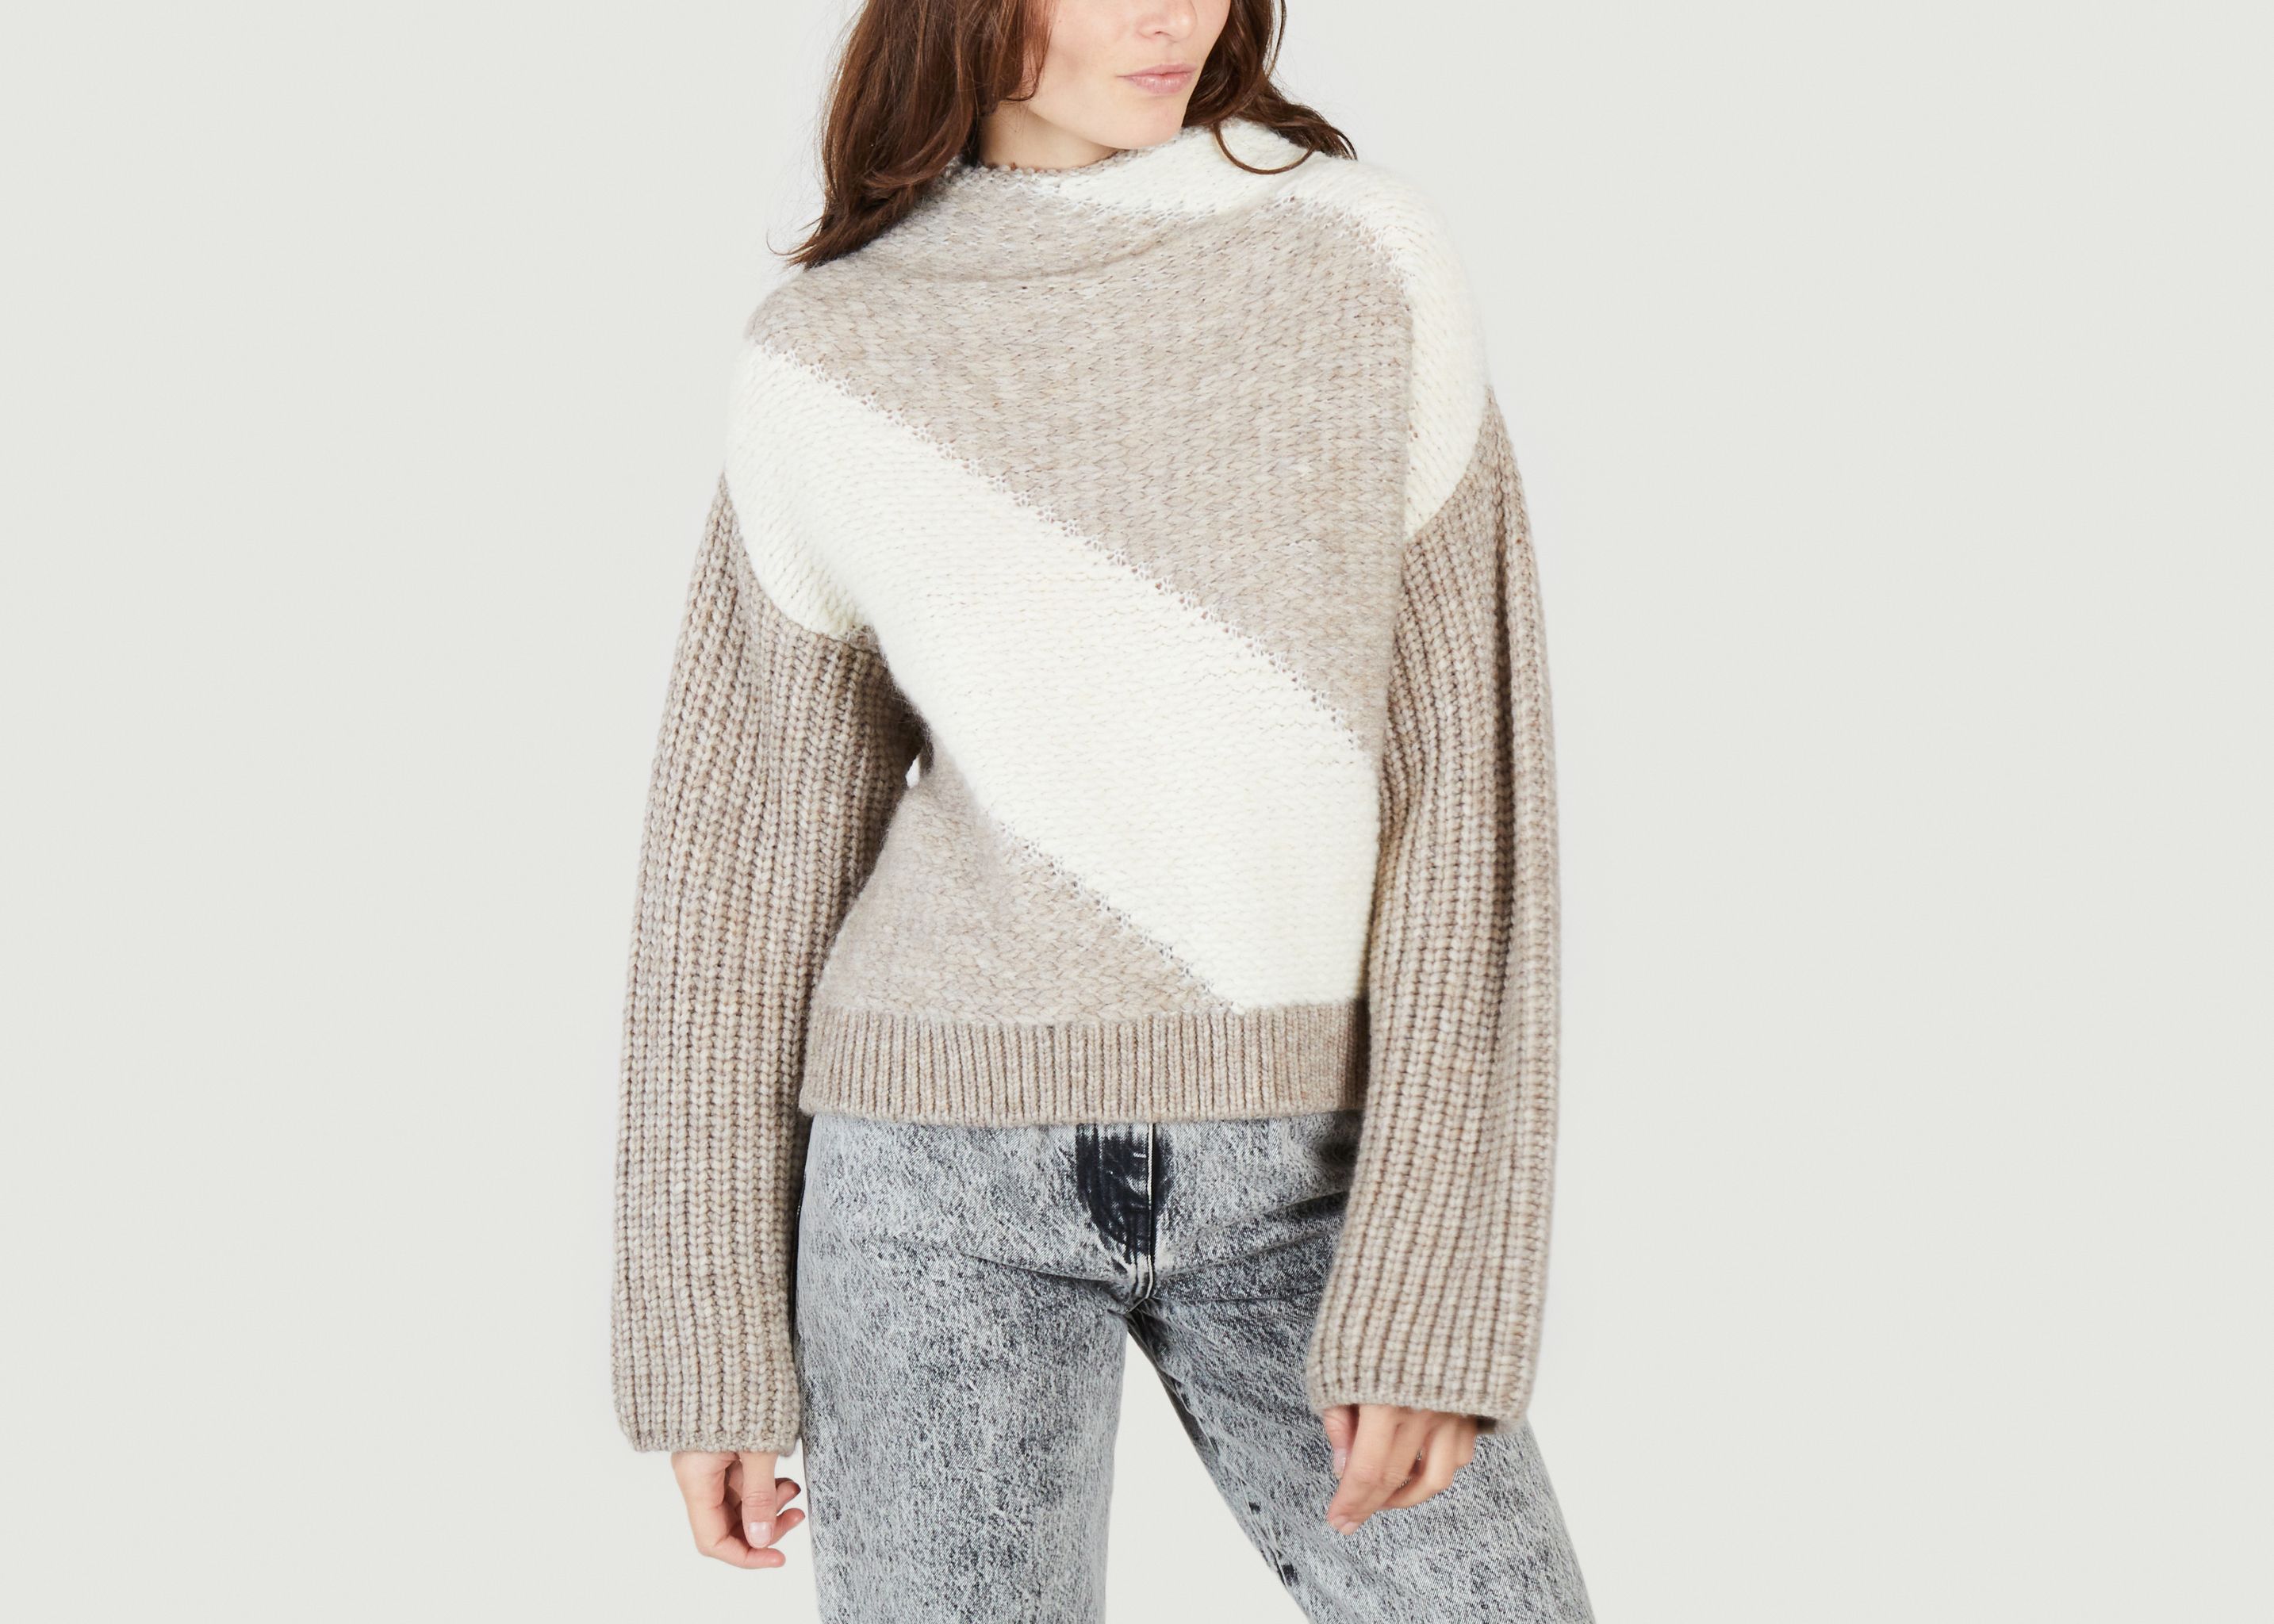 Arzel two-tone knitted sweater  - IRO